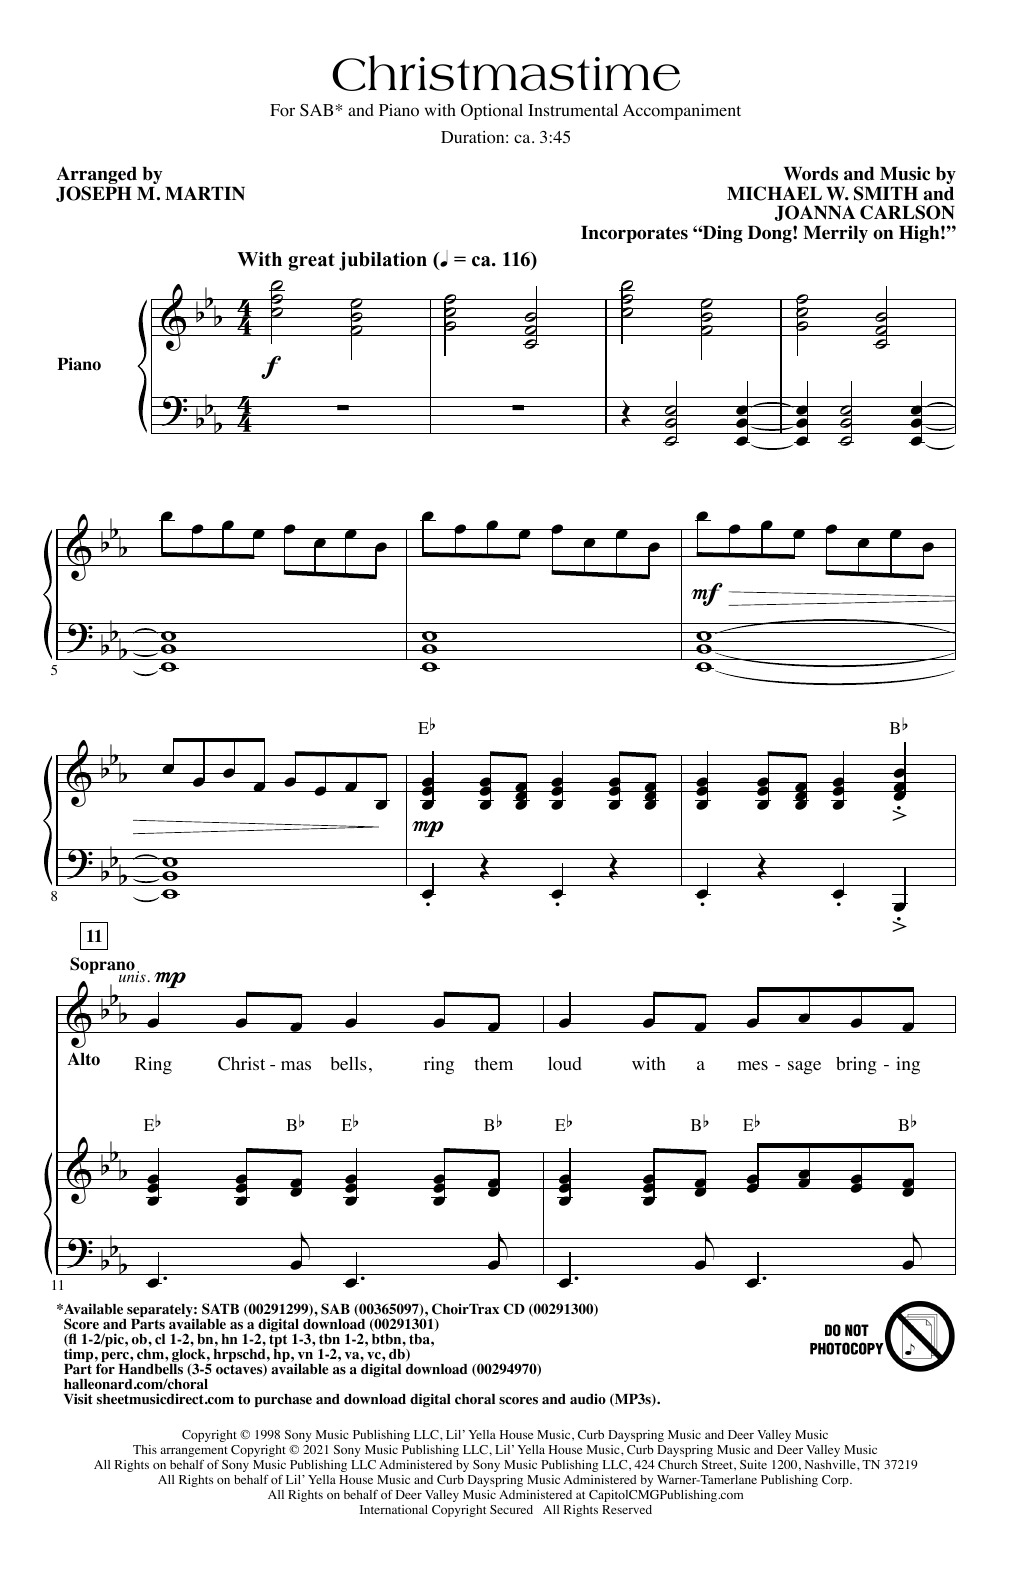 Michael W. Smith Christmastime (arr. Joseph M. Martin) Sheet Music Notes & Chords for SAB Choir - Download or Print PDF